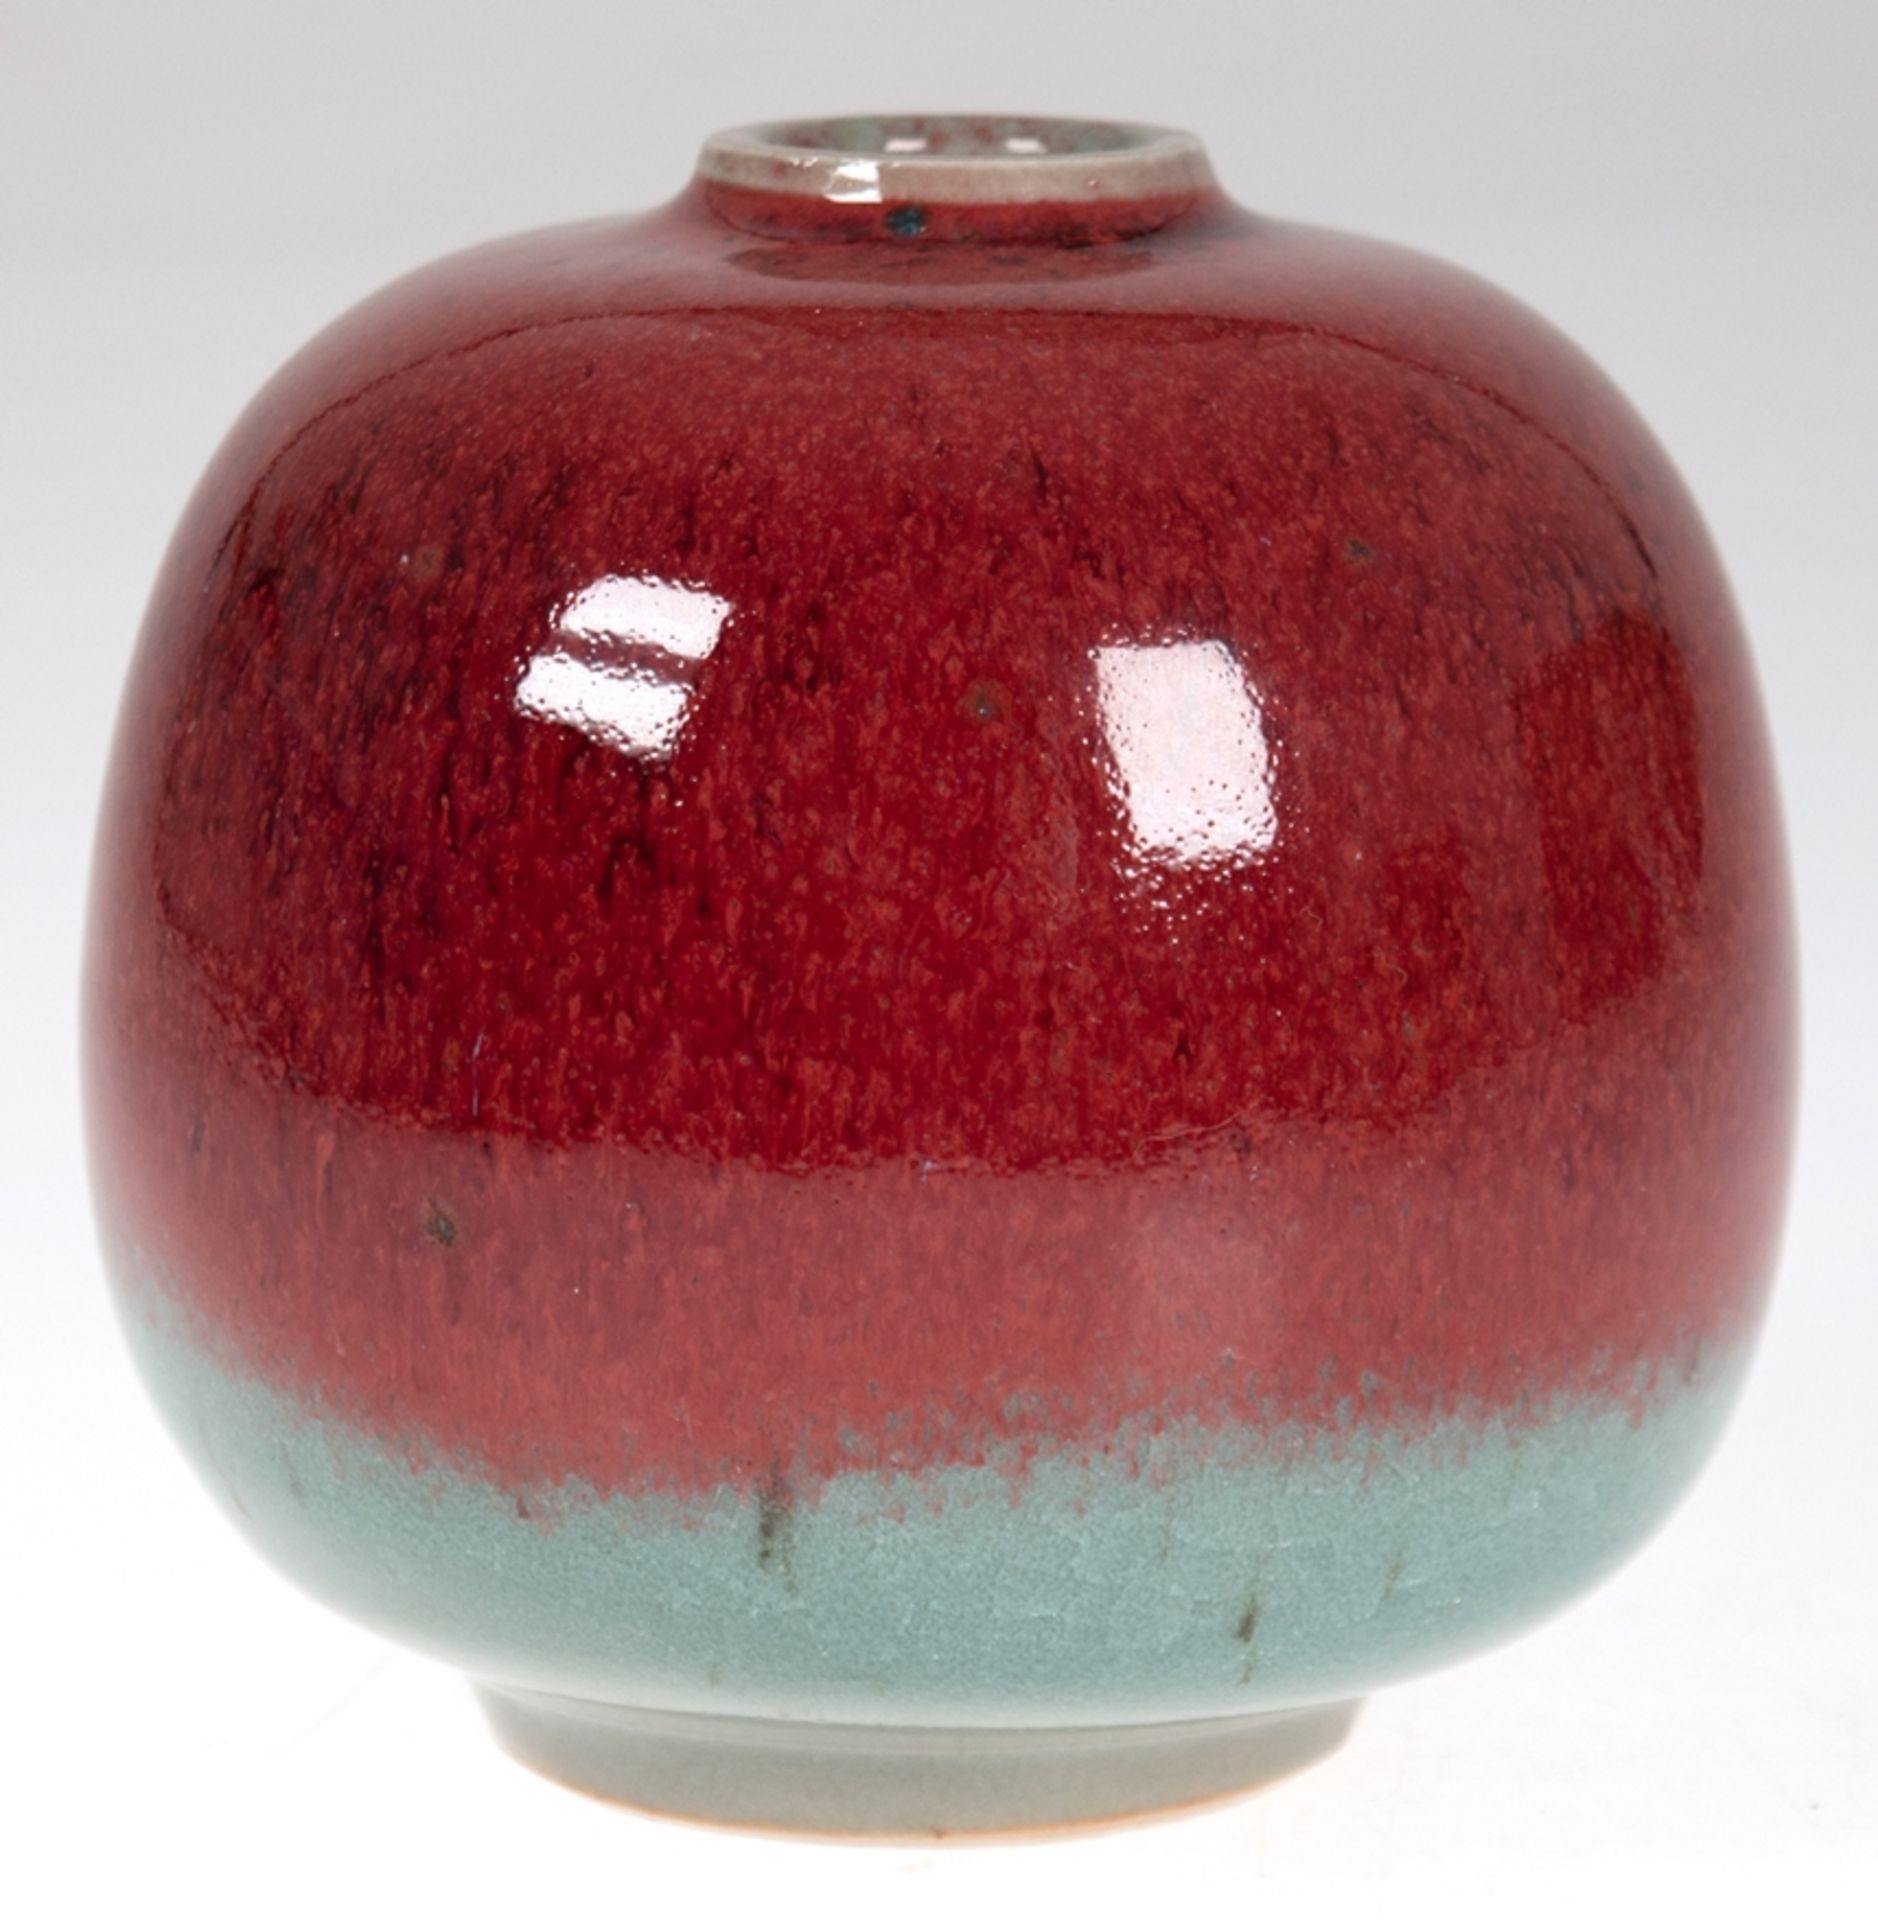 Vase, Keramik, kugelförmig,  graugrün/rot glasiert, Boden mit Ritzsignatur, H. 11,5 cm